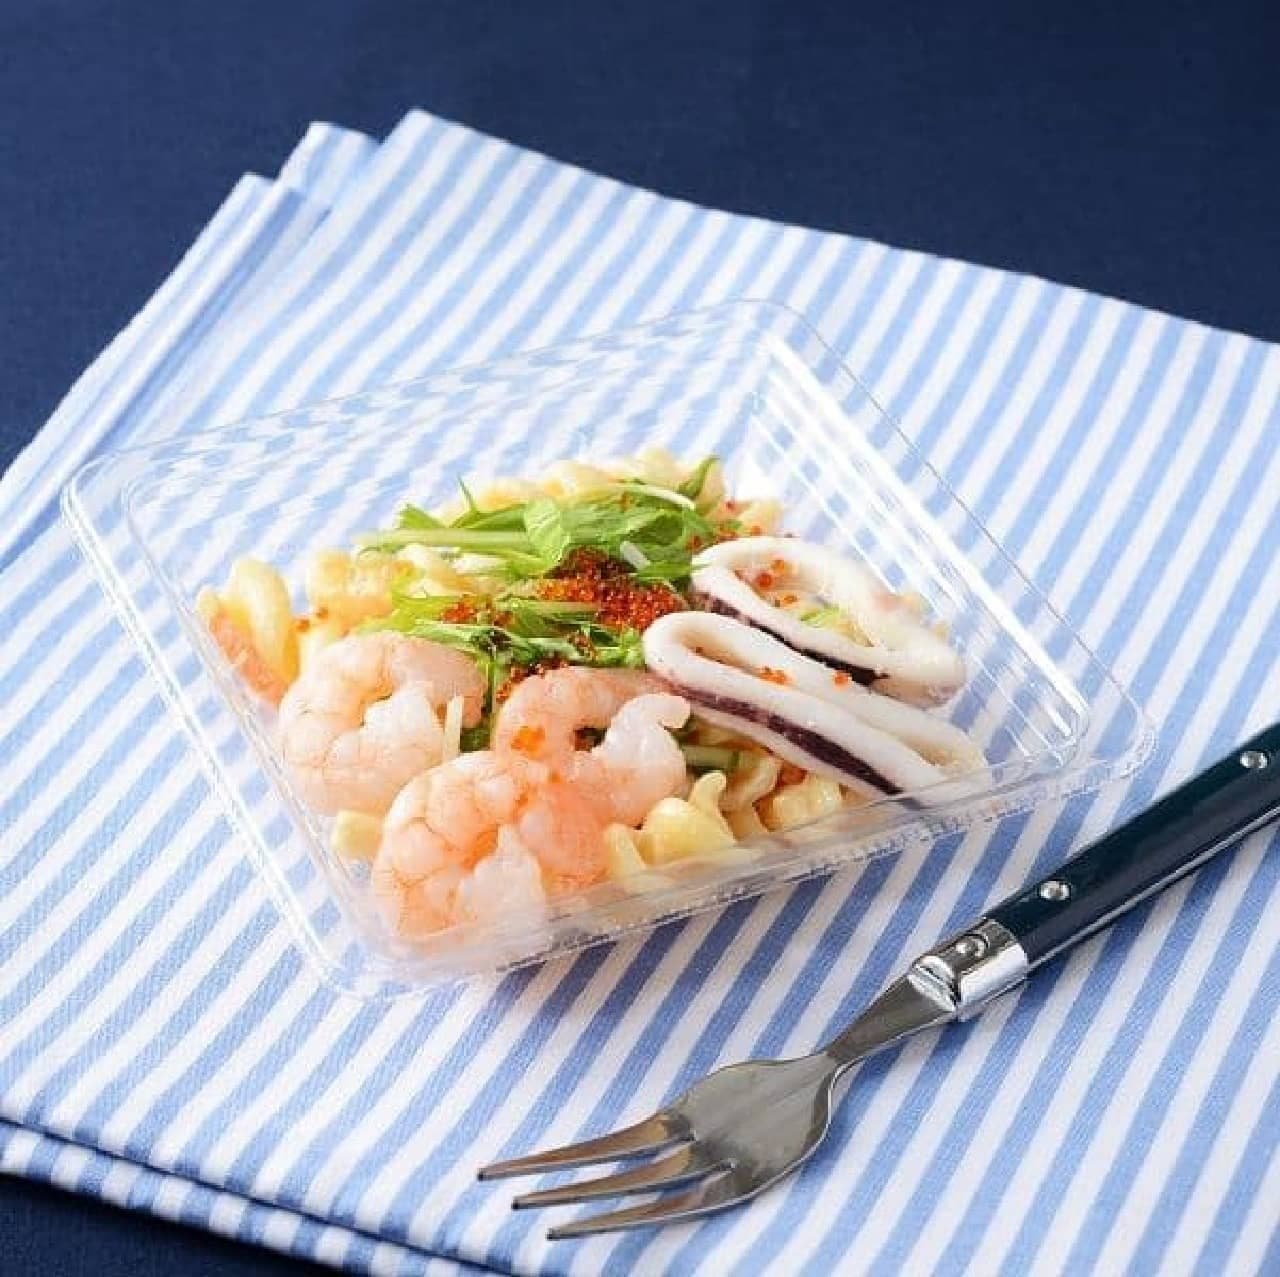 LAWSON Machi's Deli "Shrimp and Squid Mentaiko Salad